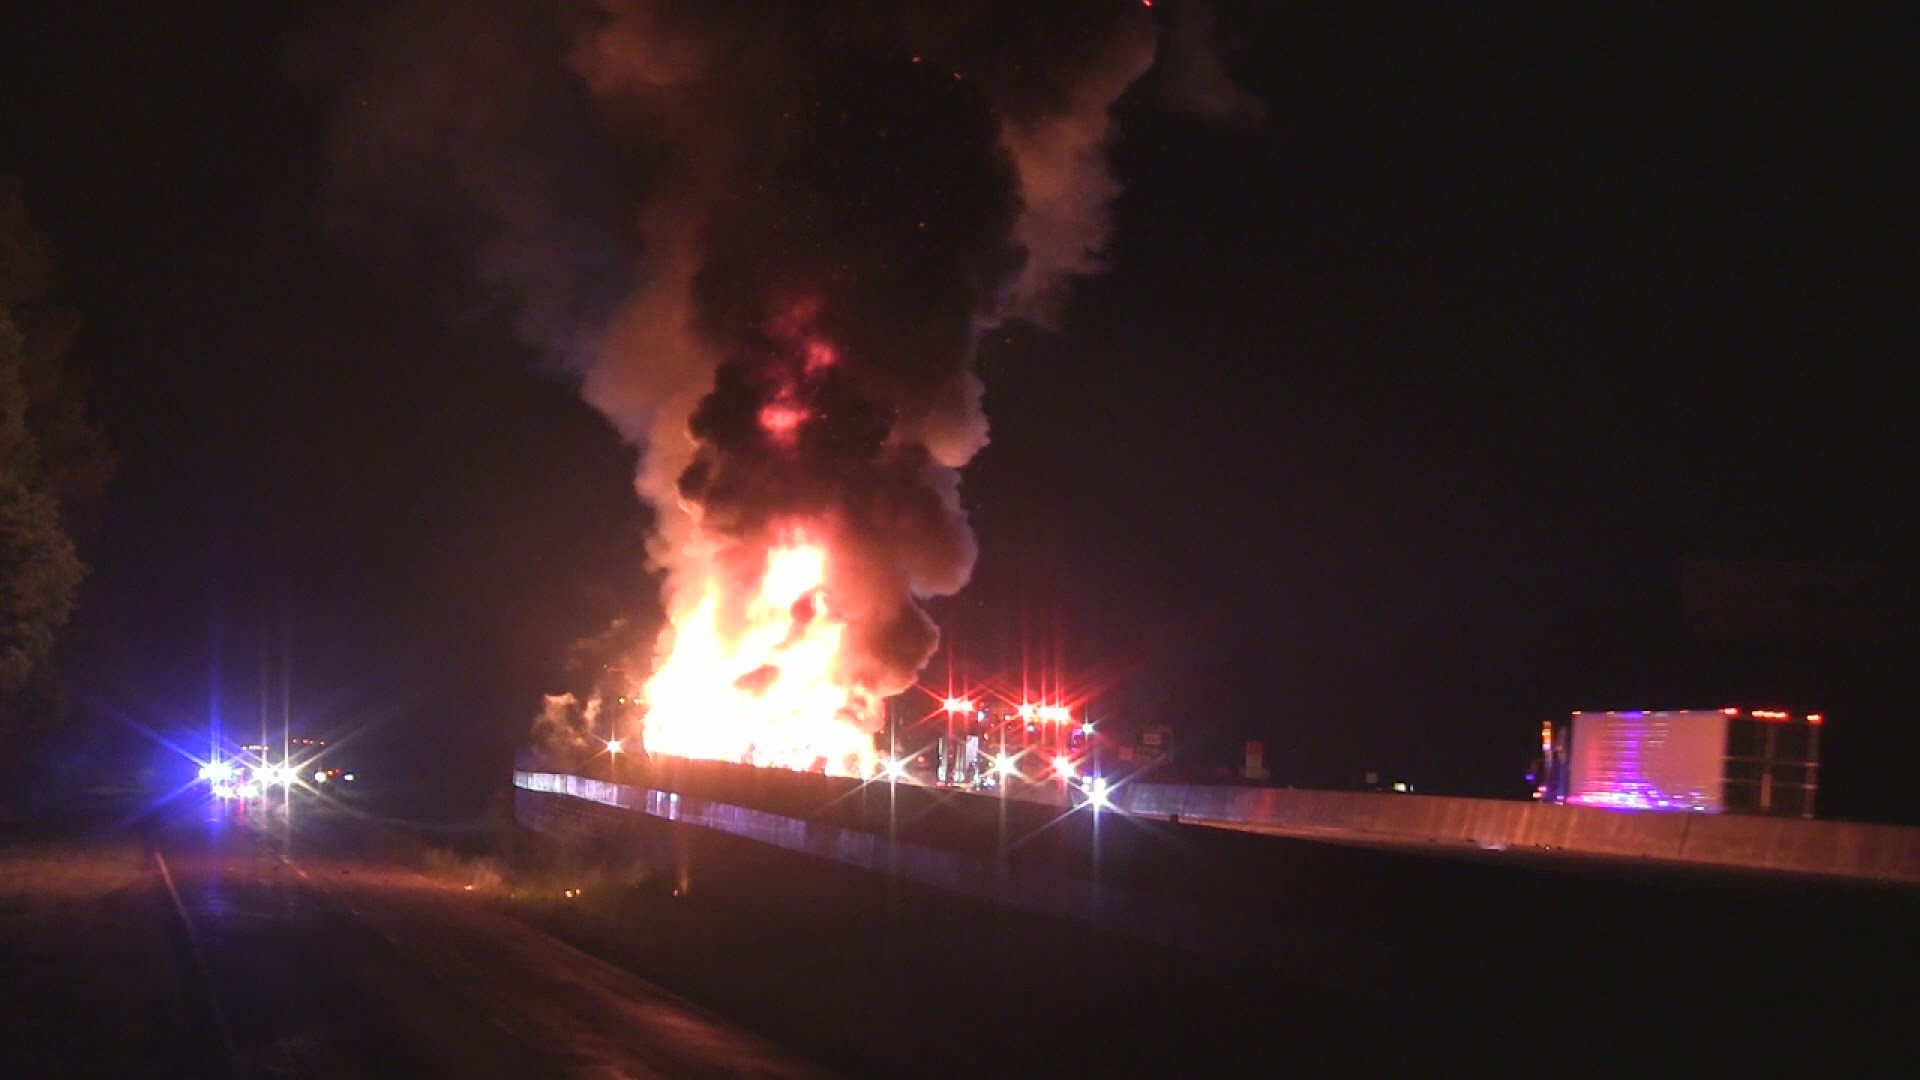 18-wheeler engulfed in flames along interstate in Orange County